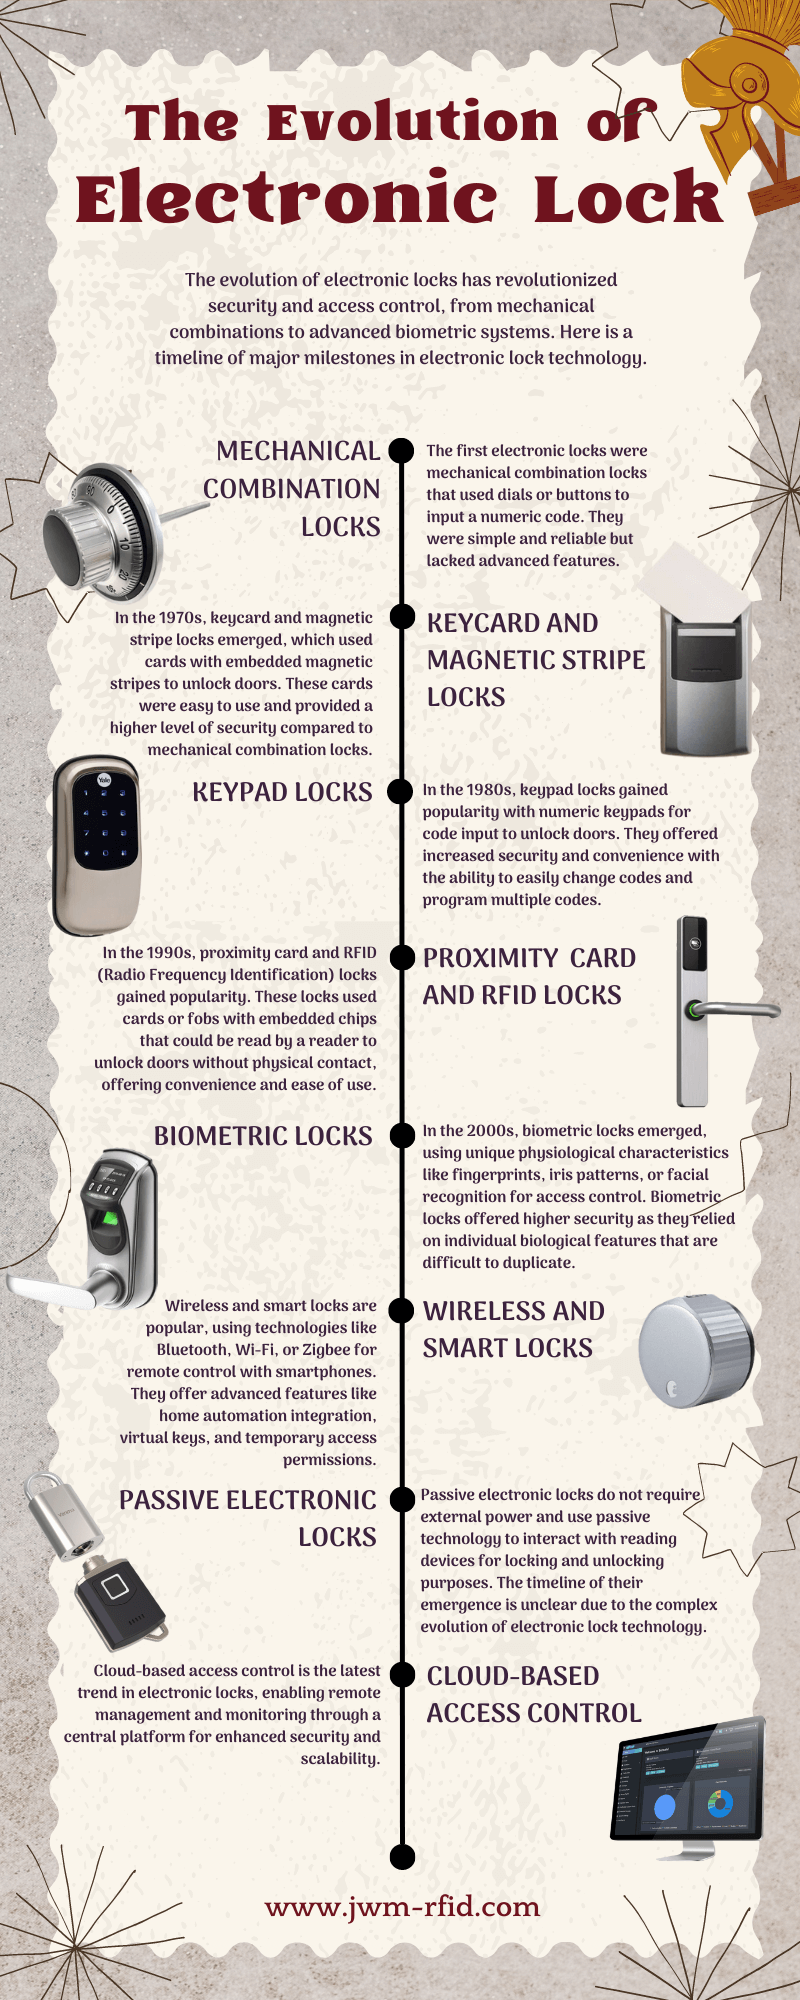 Evolution of Electronic Lock